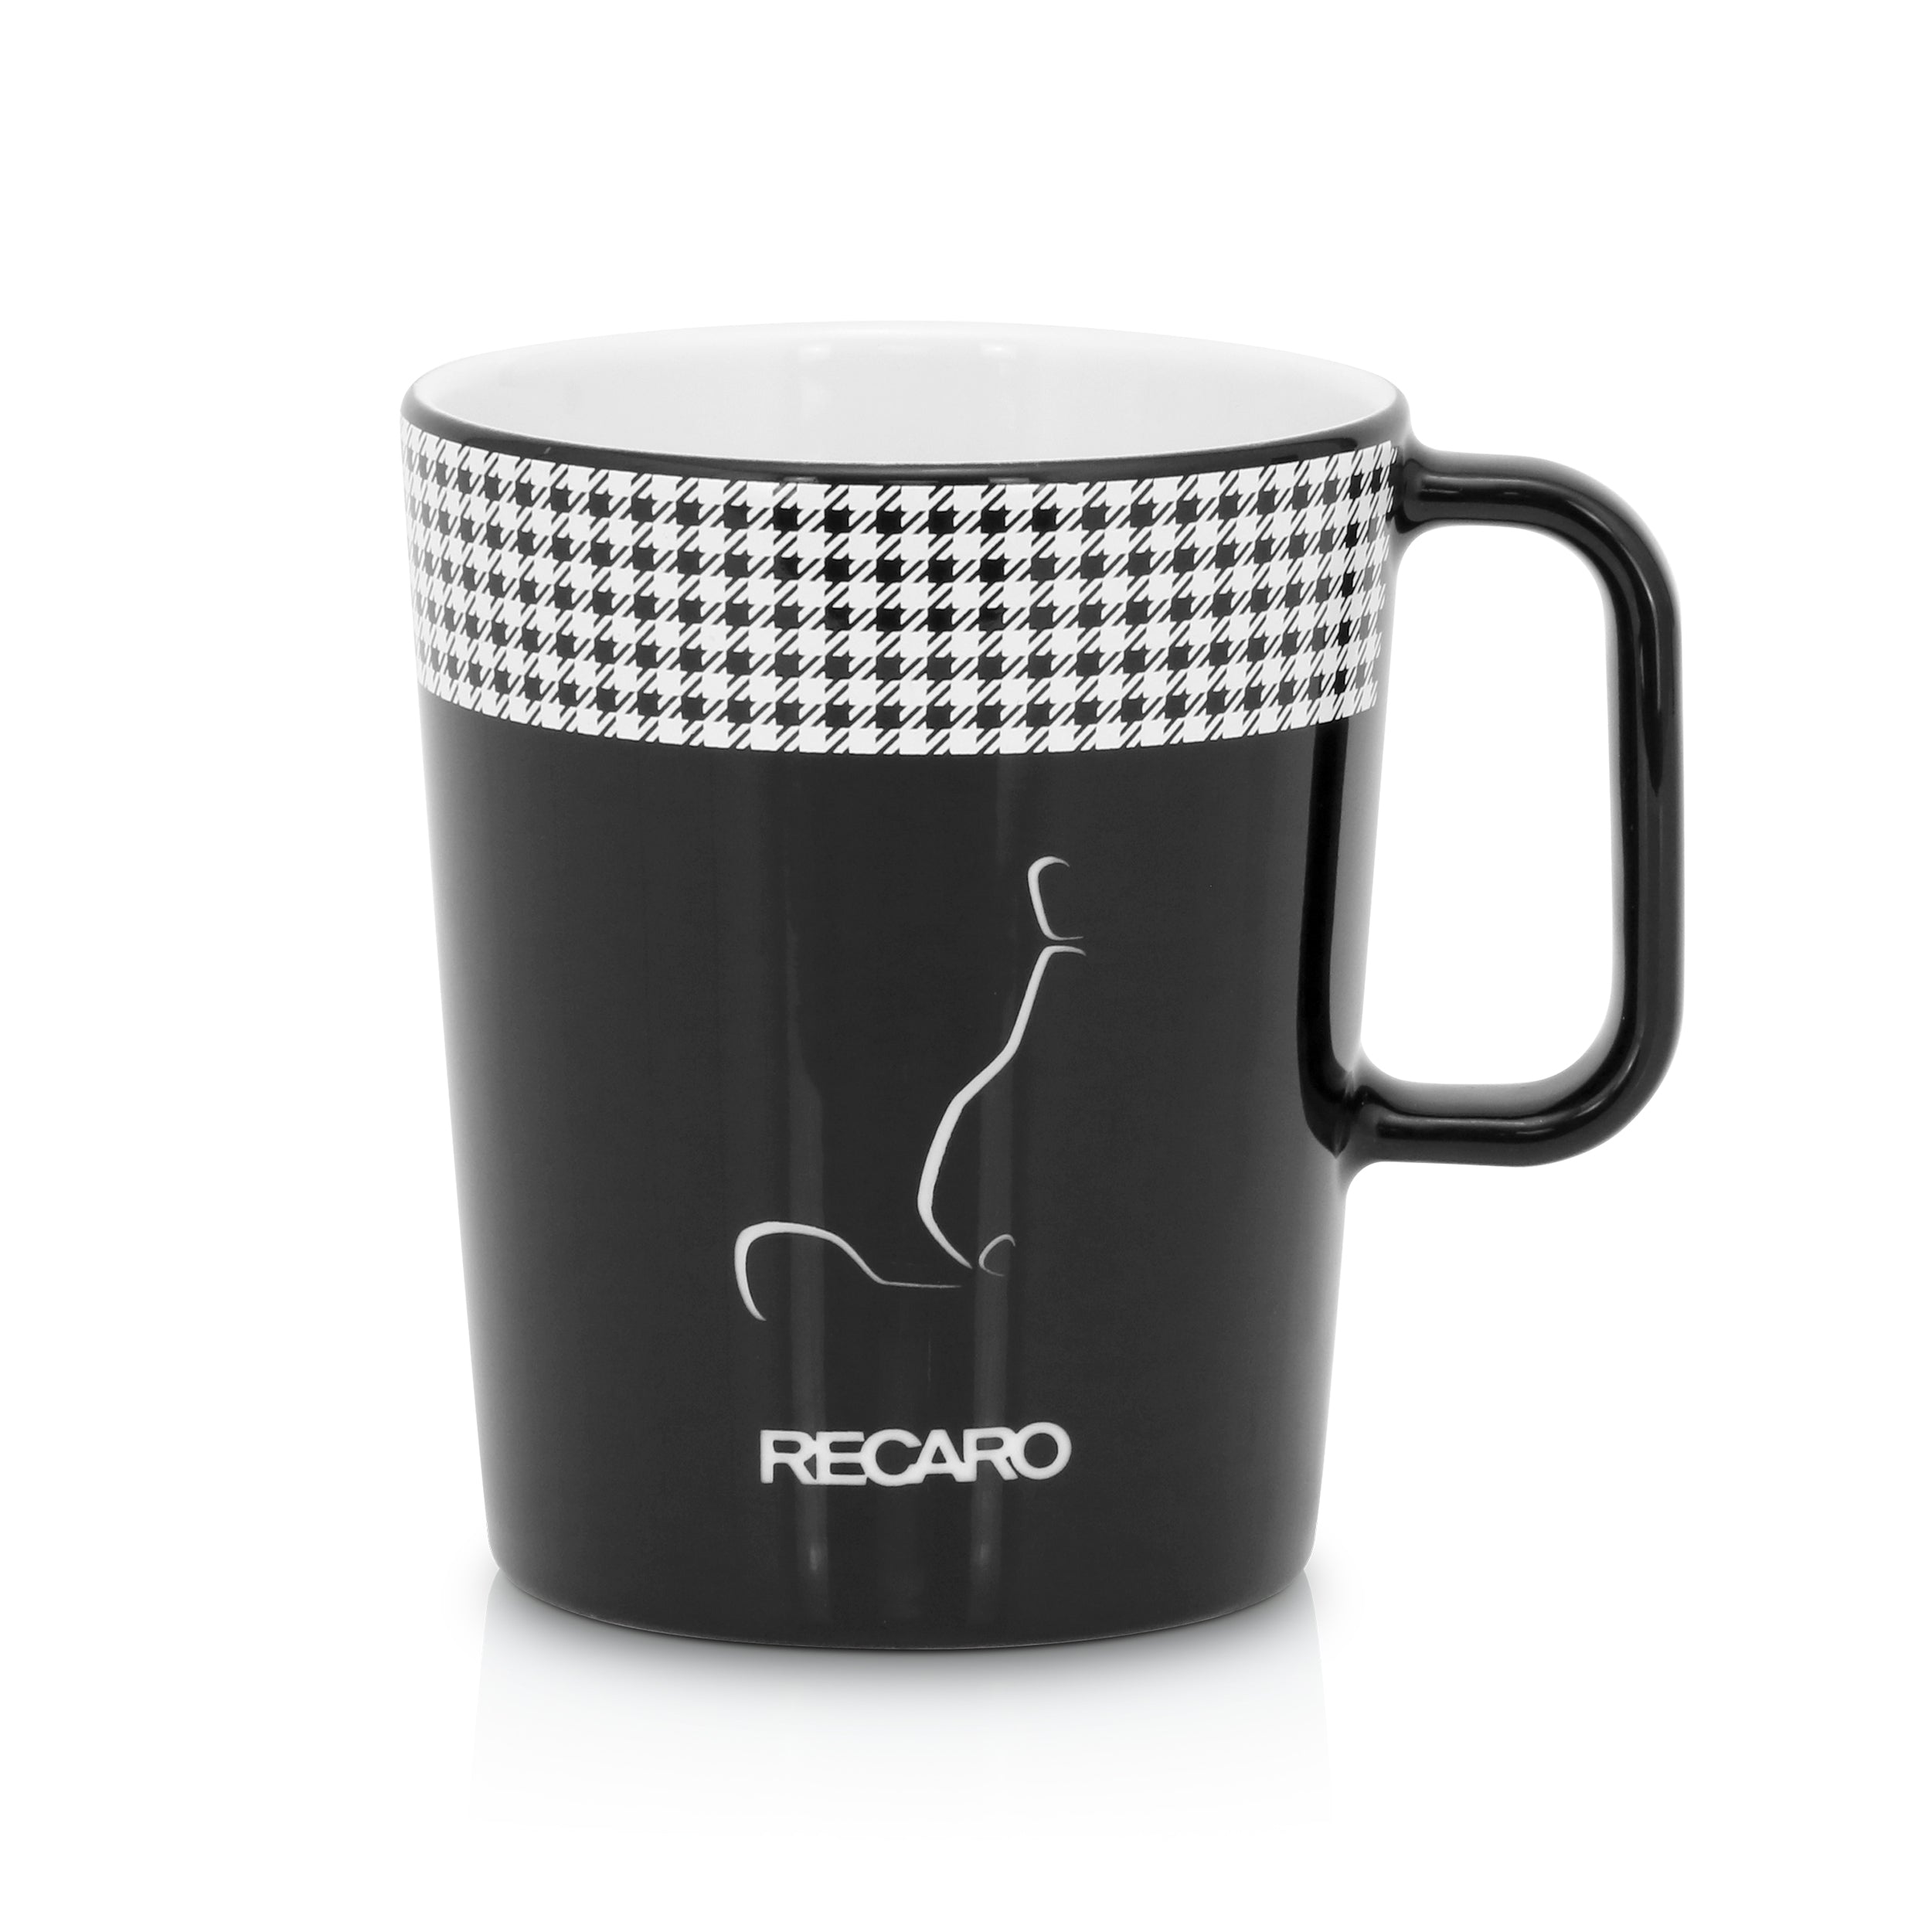 RECARO 21000390 Classic mug Photo-0 